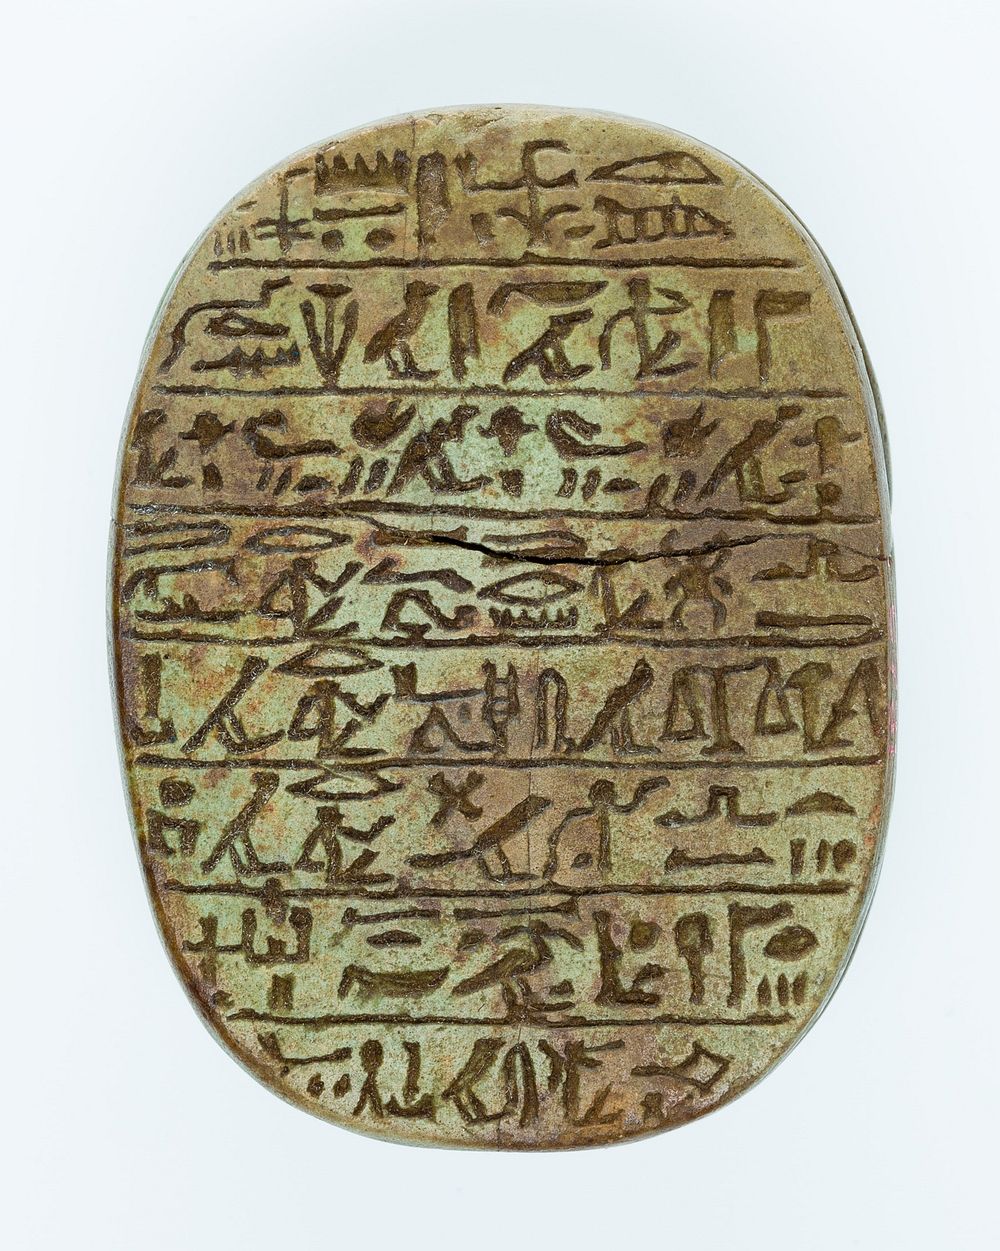 Heart scarab of Singer of Amun Iakaiu